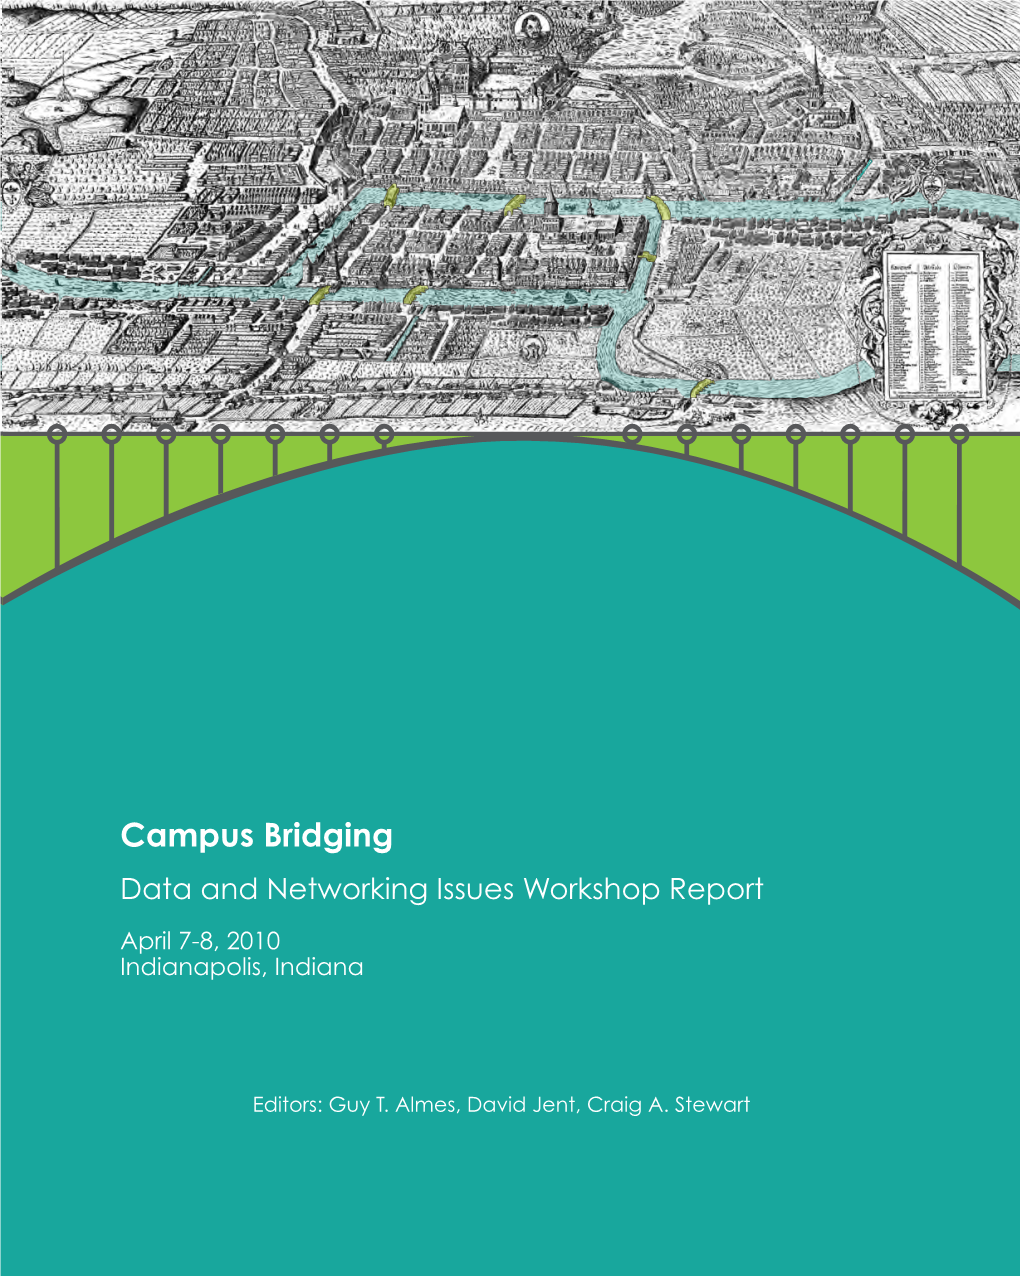 Campus Bridging Workshop Reports